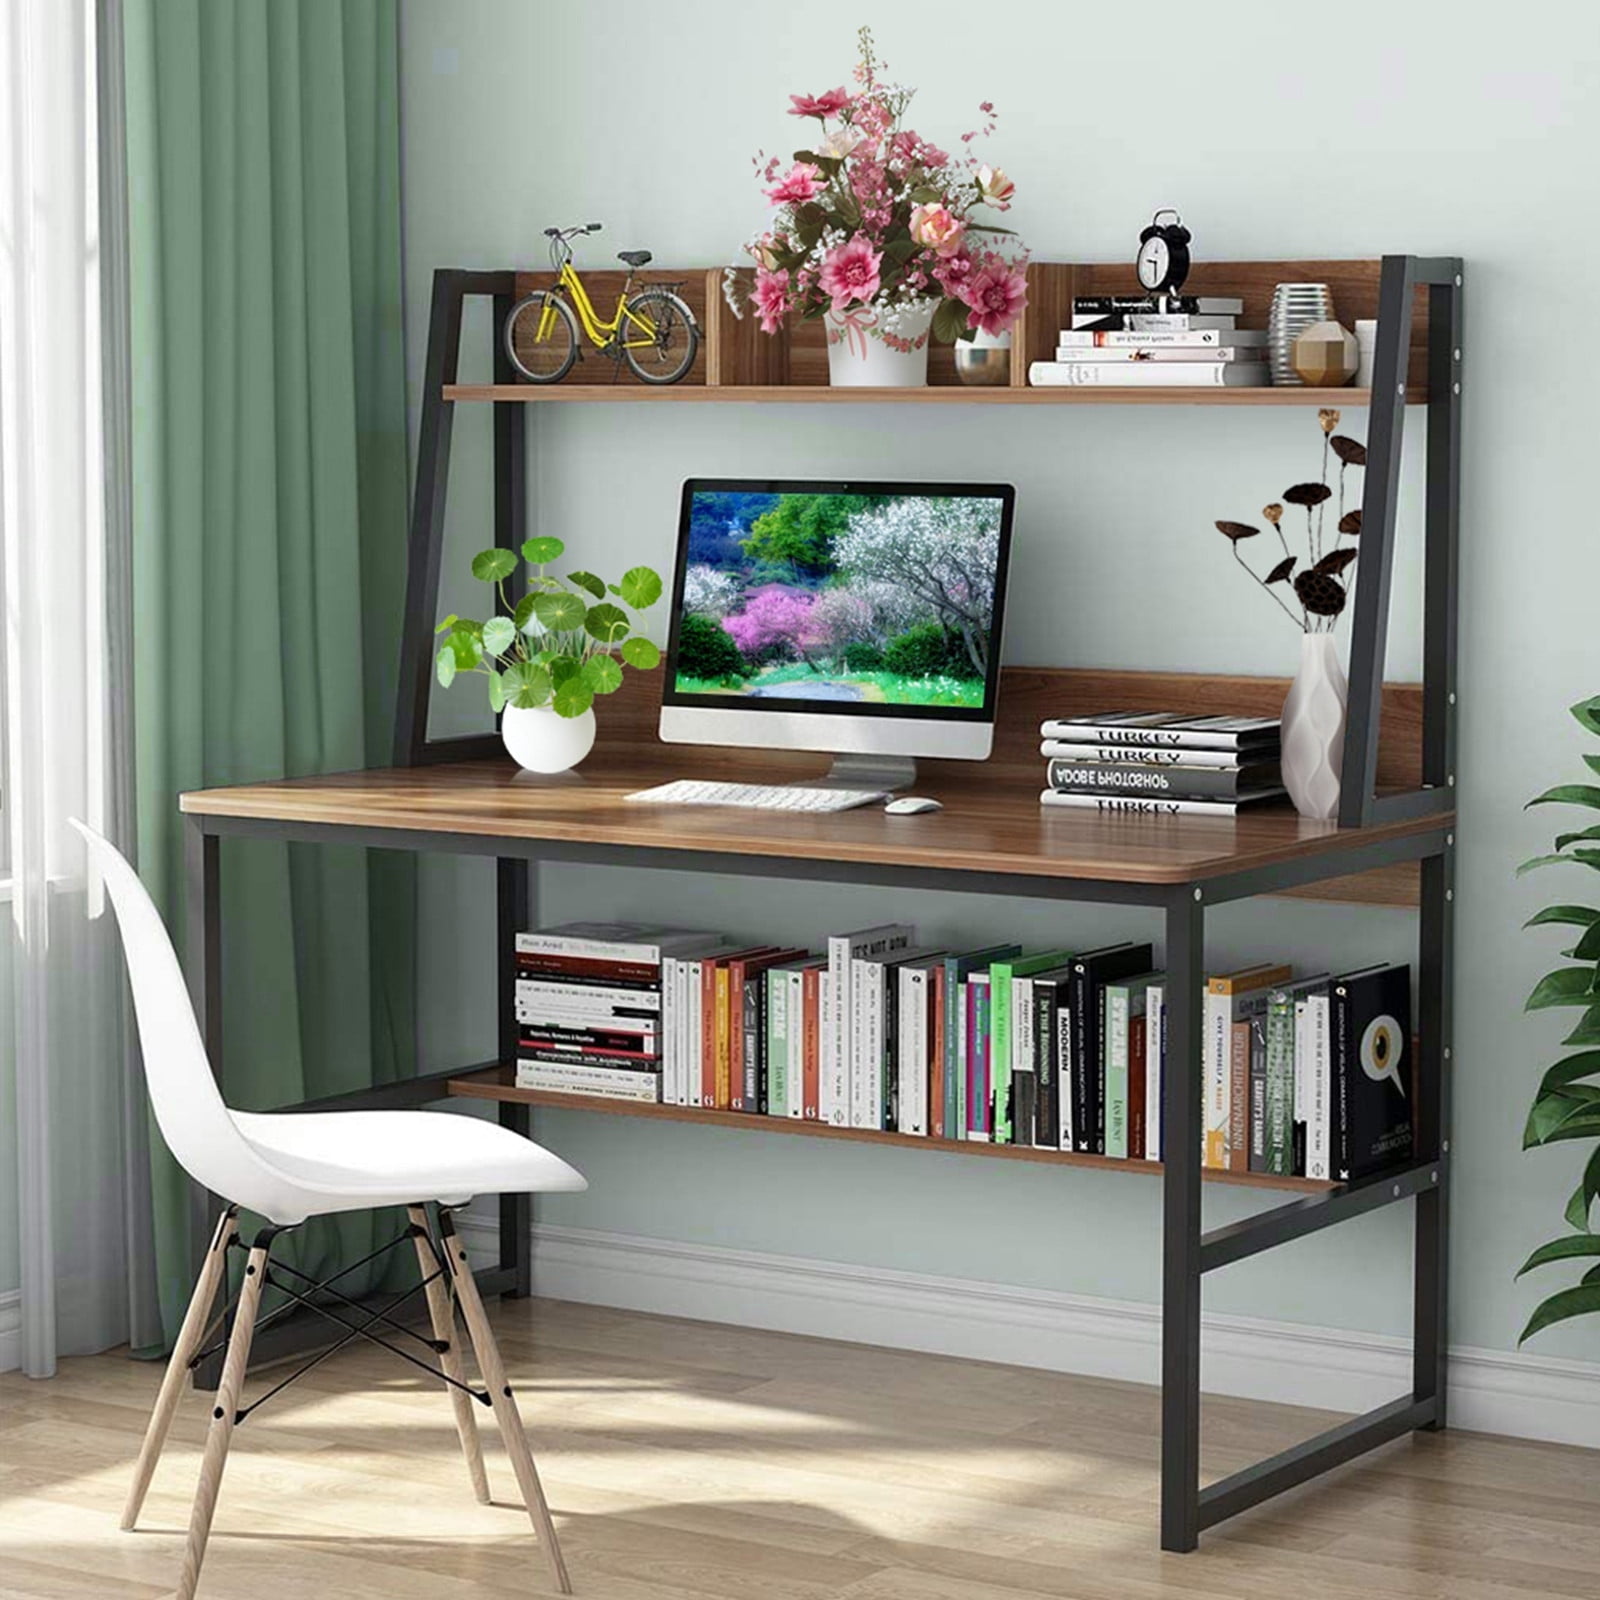 Details about   Computer Desk PC Laptop Table Bookshelf Study Workstation Home Office W/Shelf 